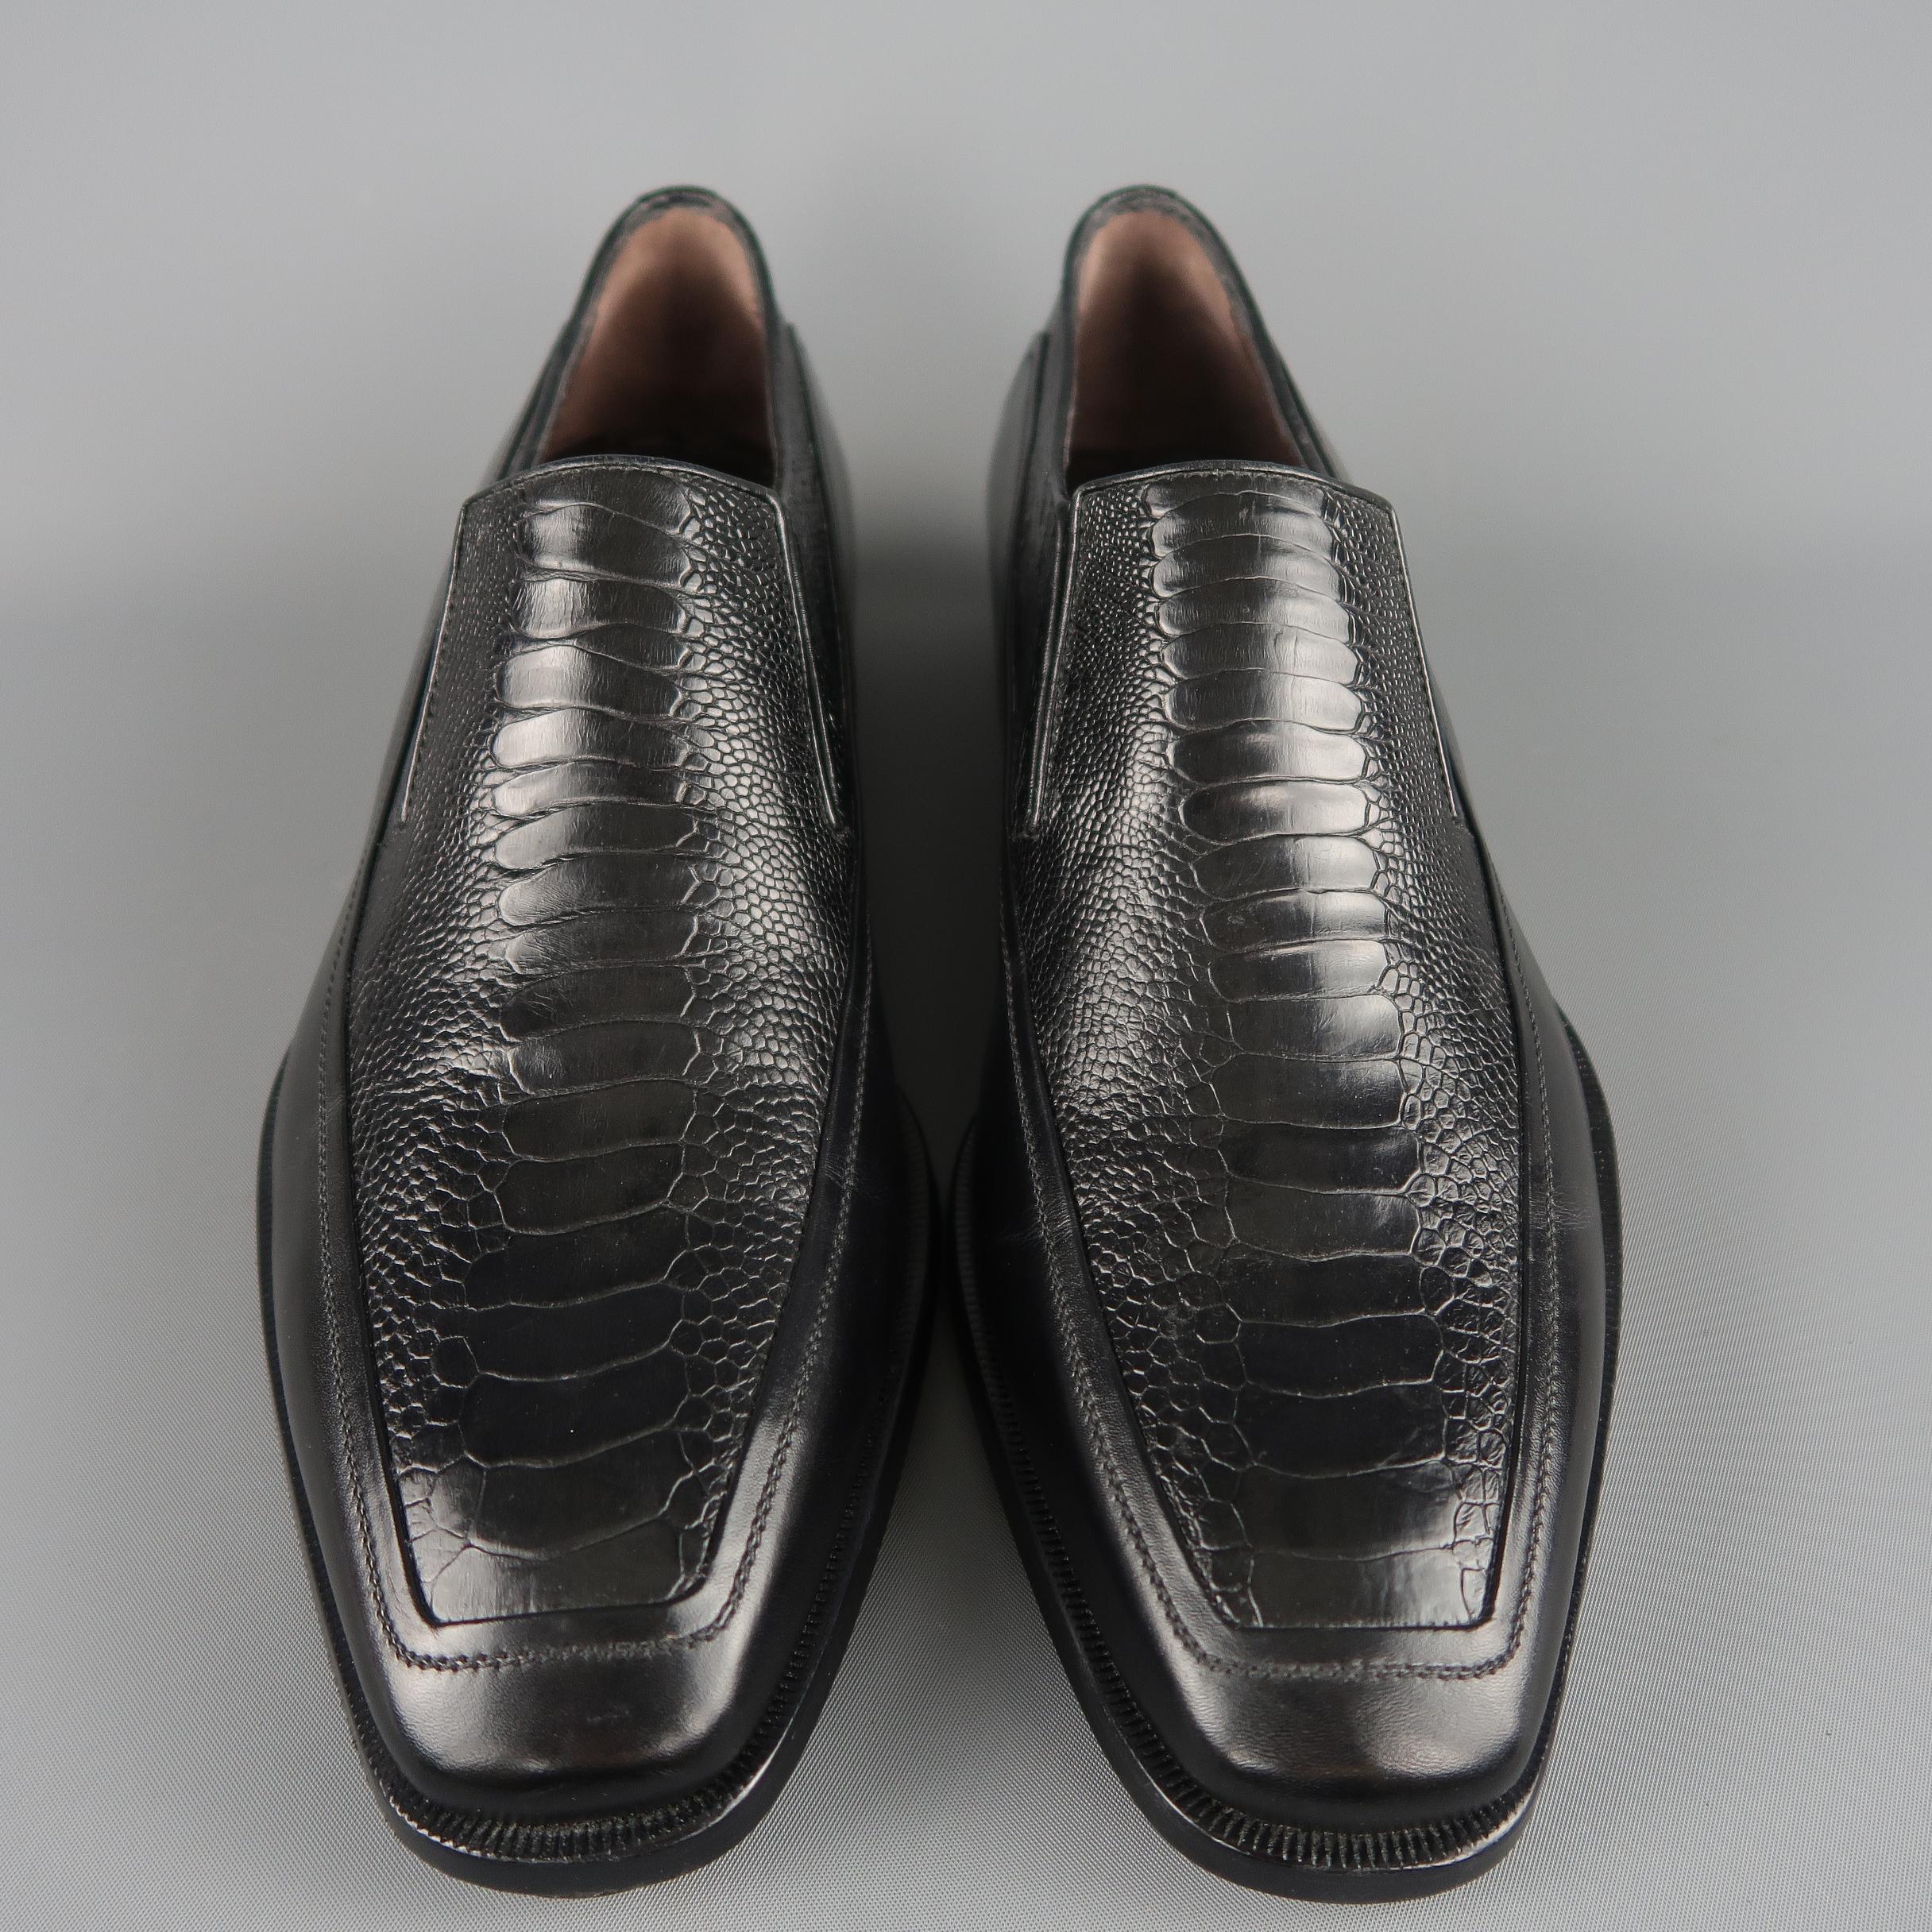 Men's A.Testoni Dress Shoes / Black Lizard Leather Panel Dress Loafers